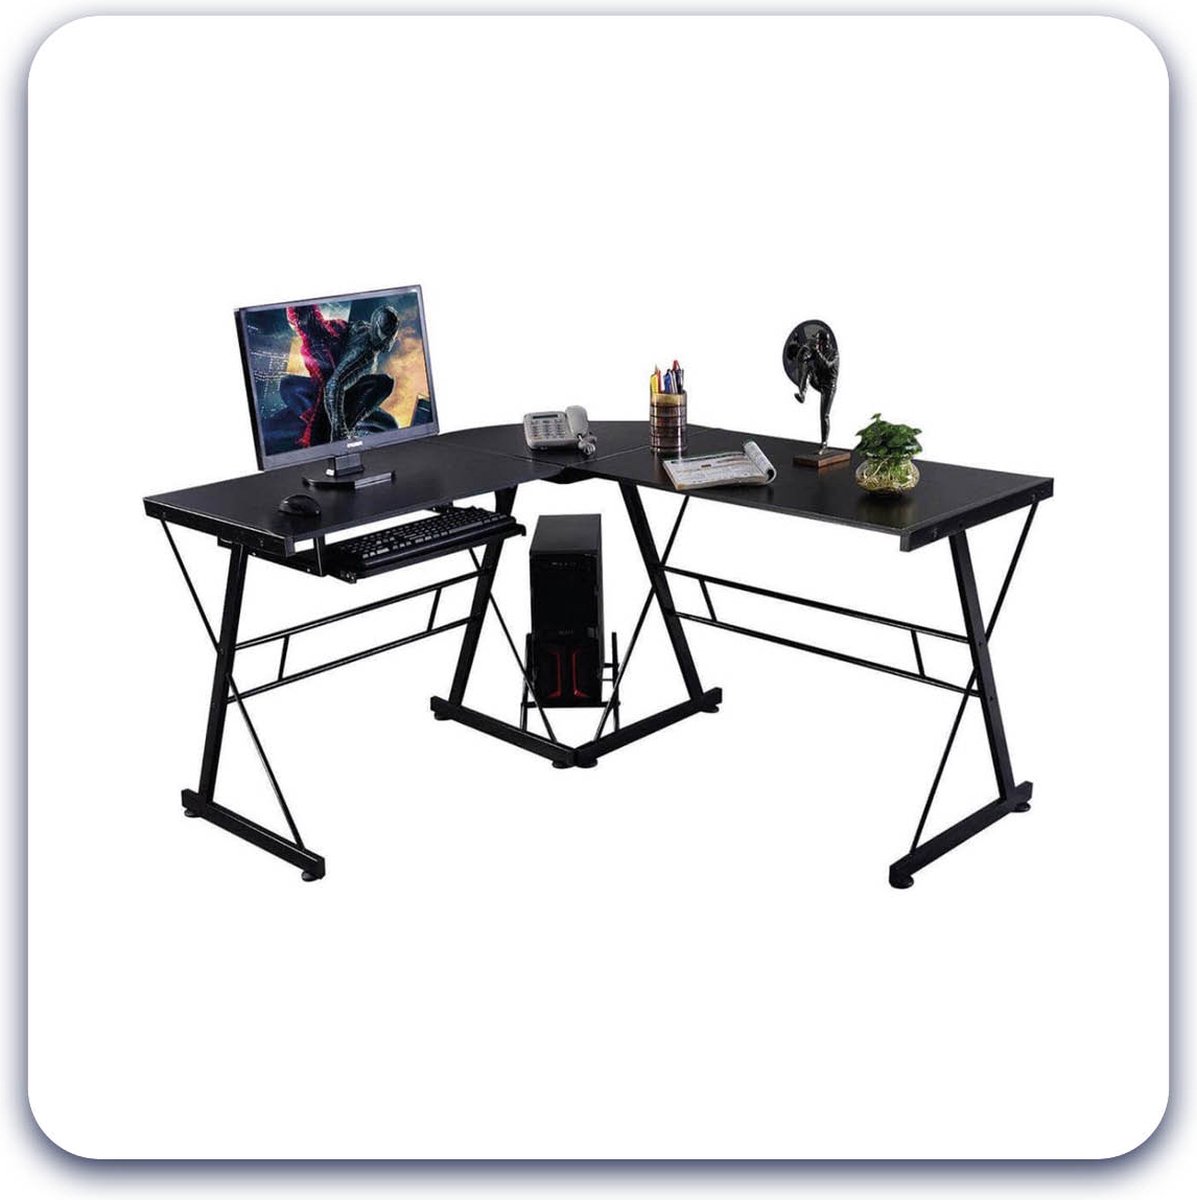 EASTWALL gaming bureau - hoekbureau zwart - extra stevig L vormig bureau - computertafel met desktopstandaard en toetsenbordhouder